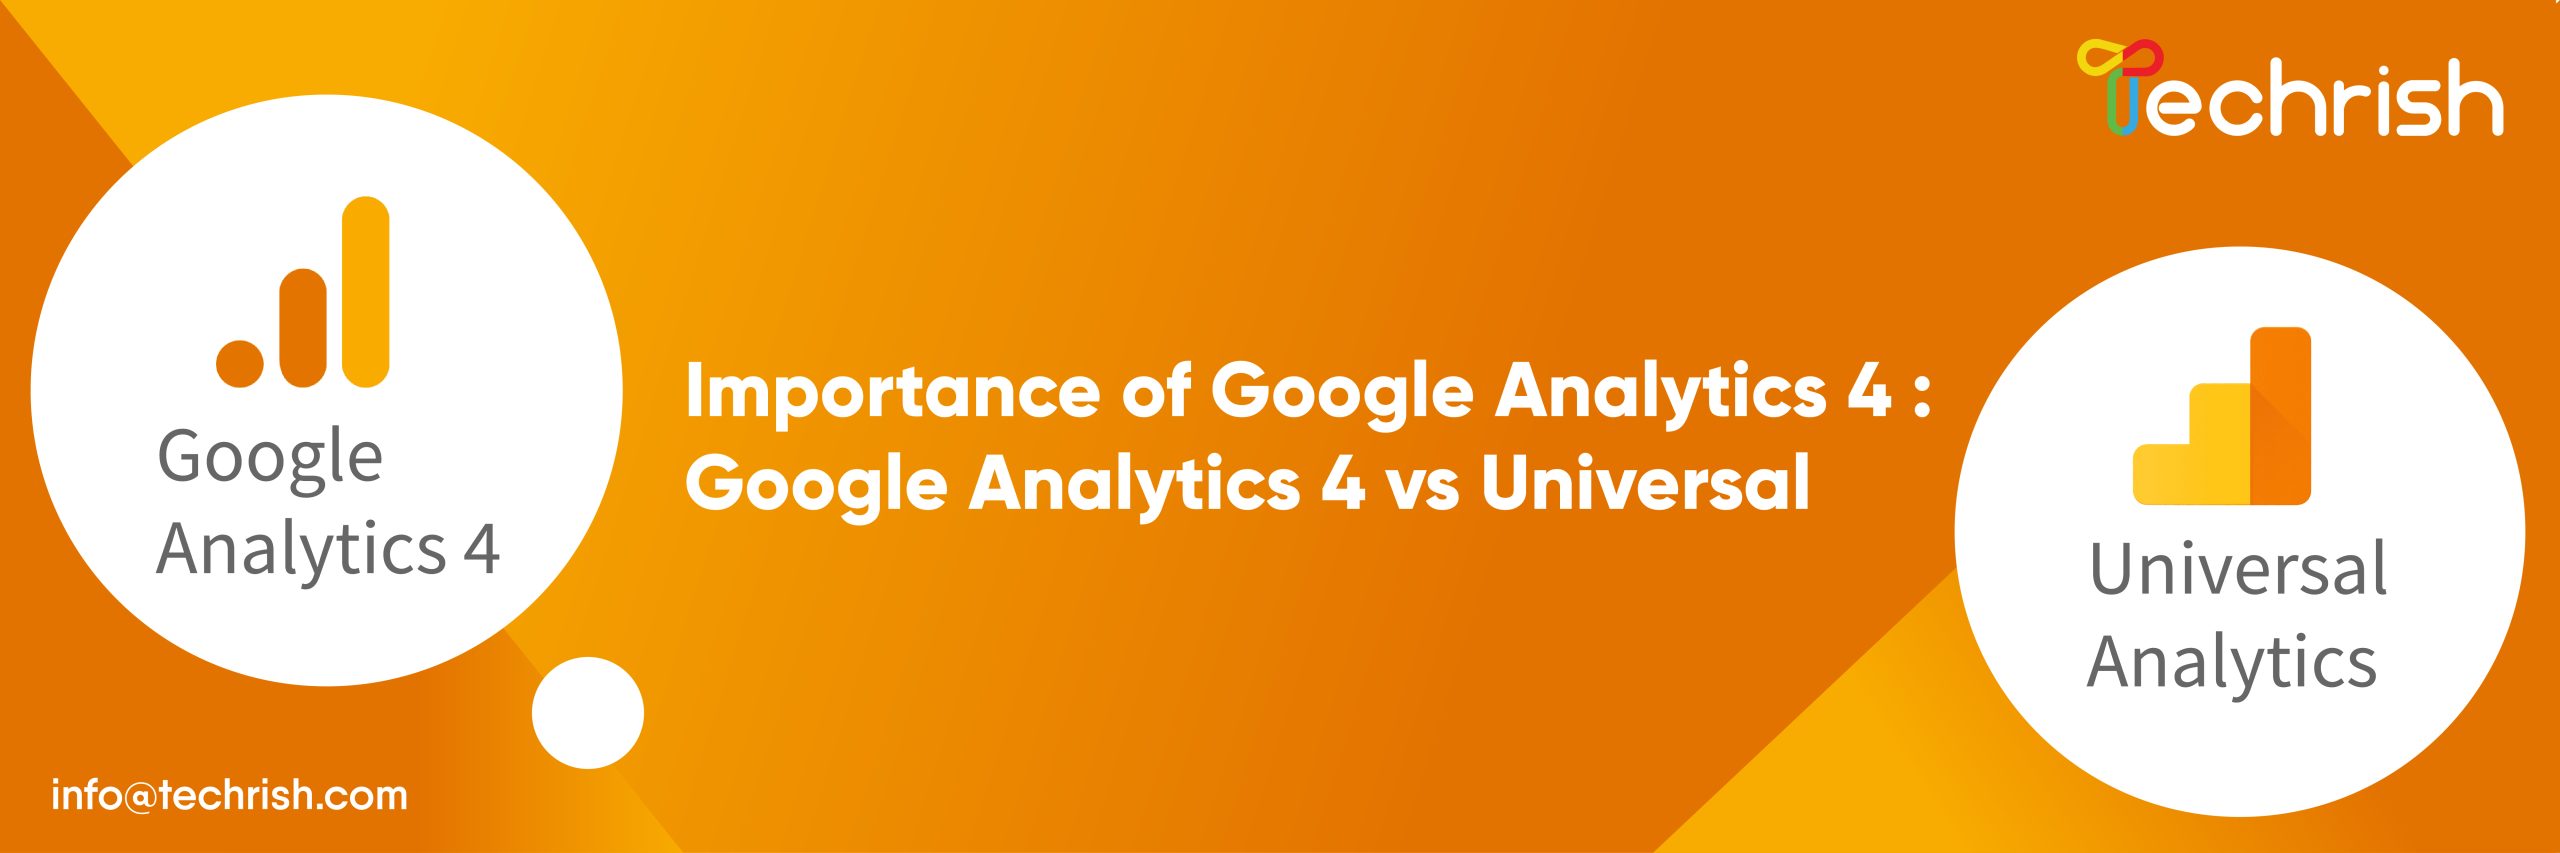 Importance of Google Analytics 4: Google Analytics vs Universal Analytics